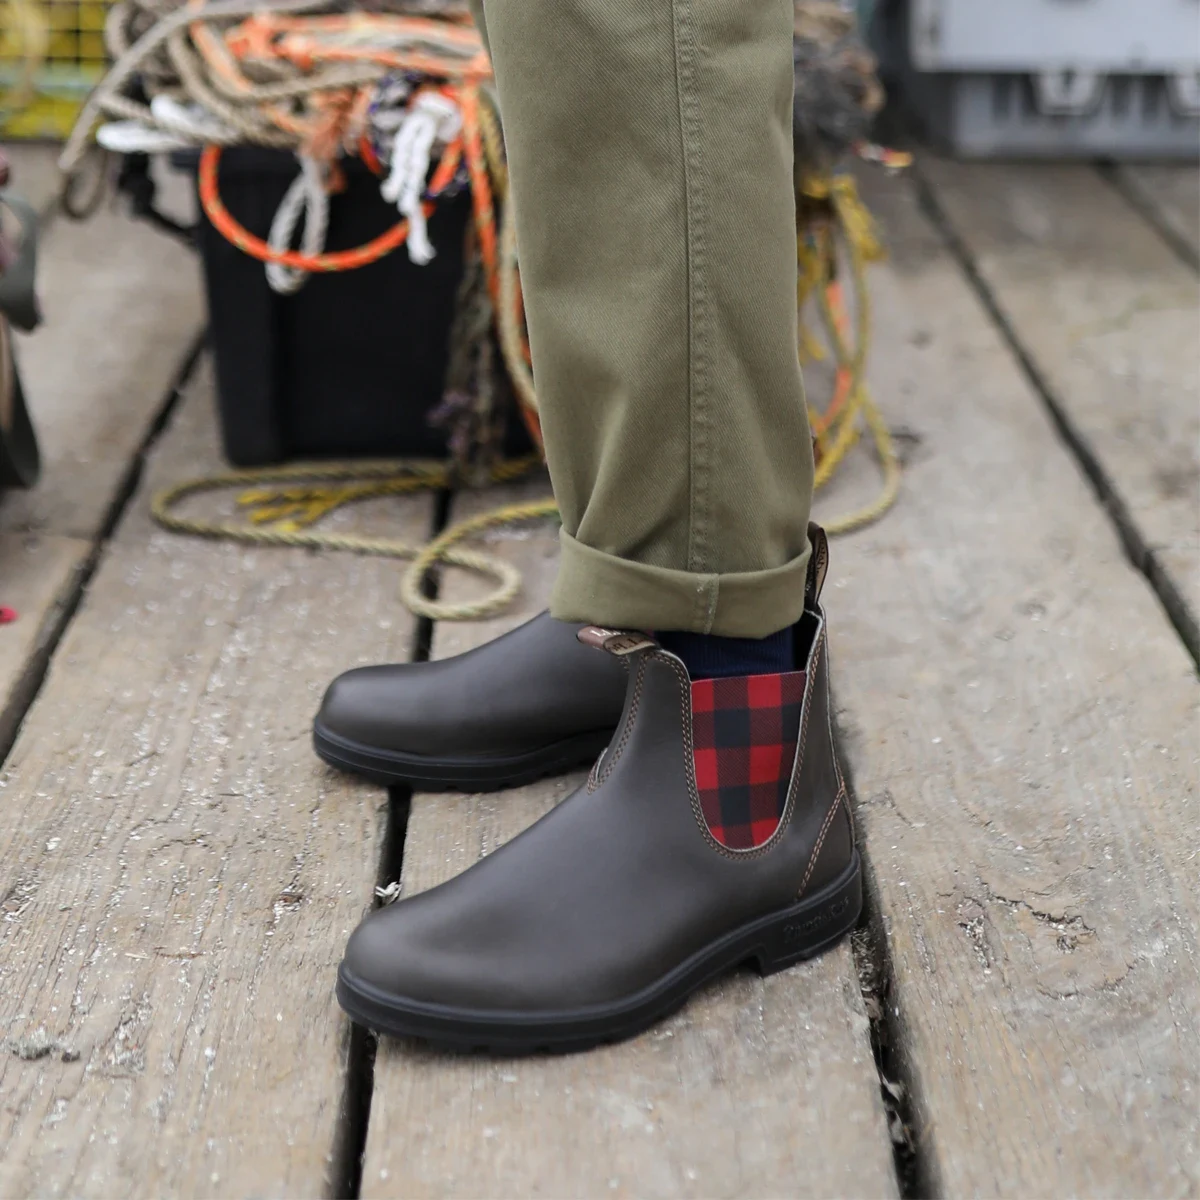 Blundstone x L.L. Bean’s Chelsea Boots Featured In Inside Hook